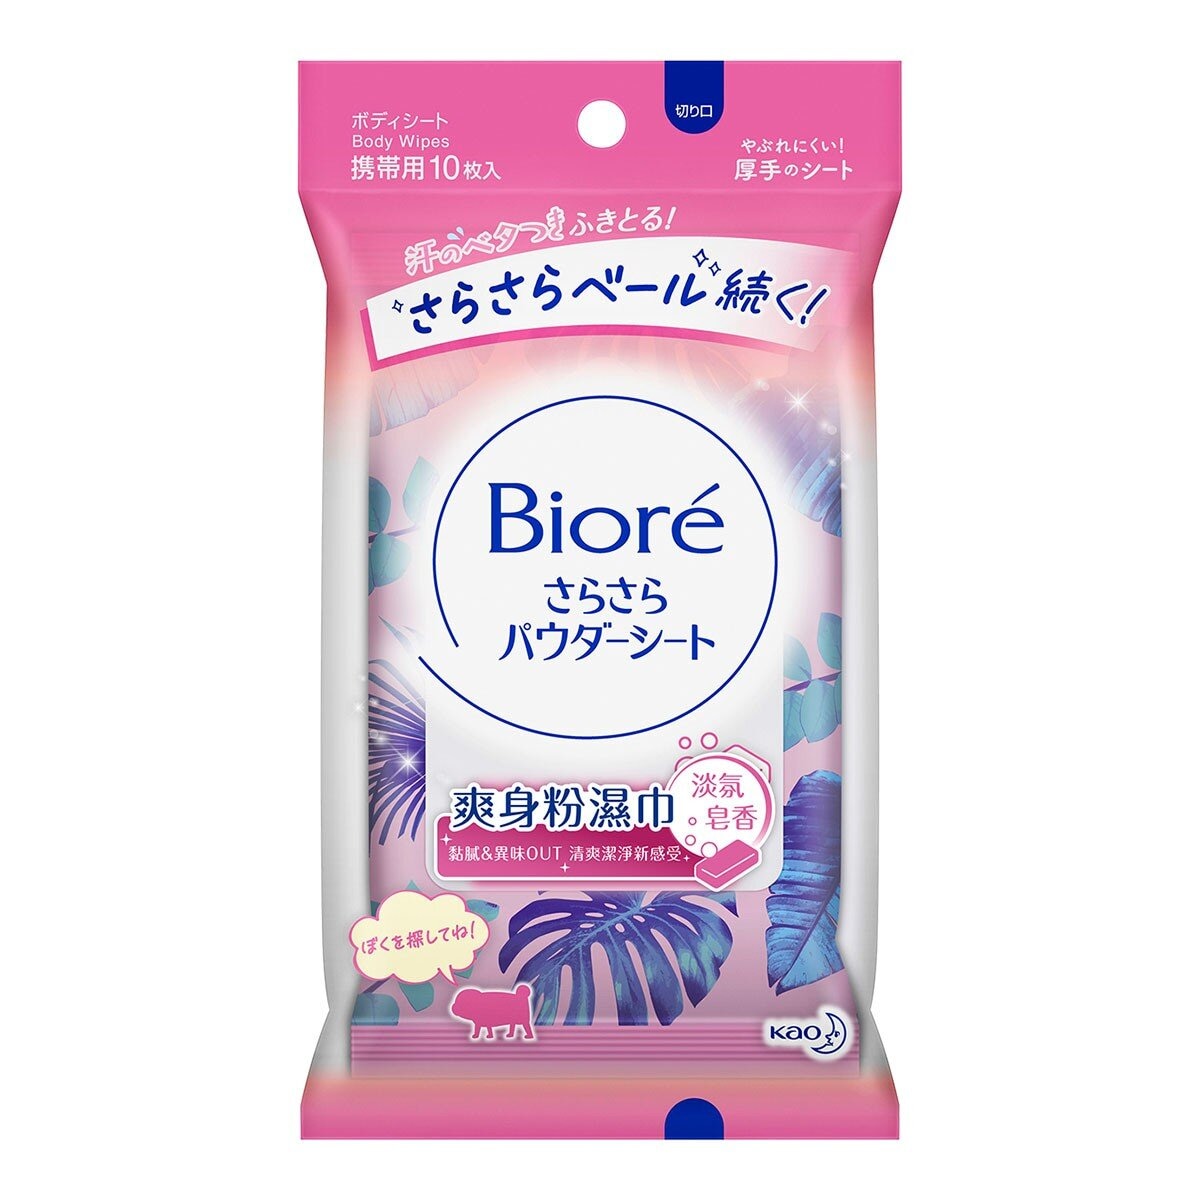 Biore -3°C涼感濕巾 清新花香 X 1包 + 爽身粉濕巾系列 X 5包 盒裝組合